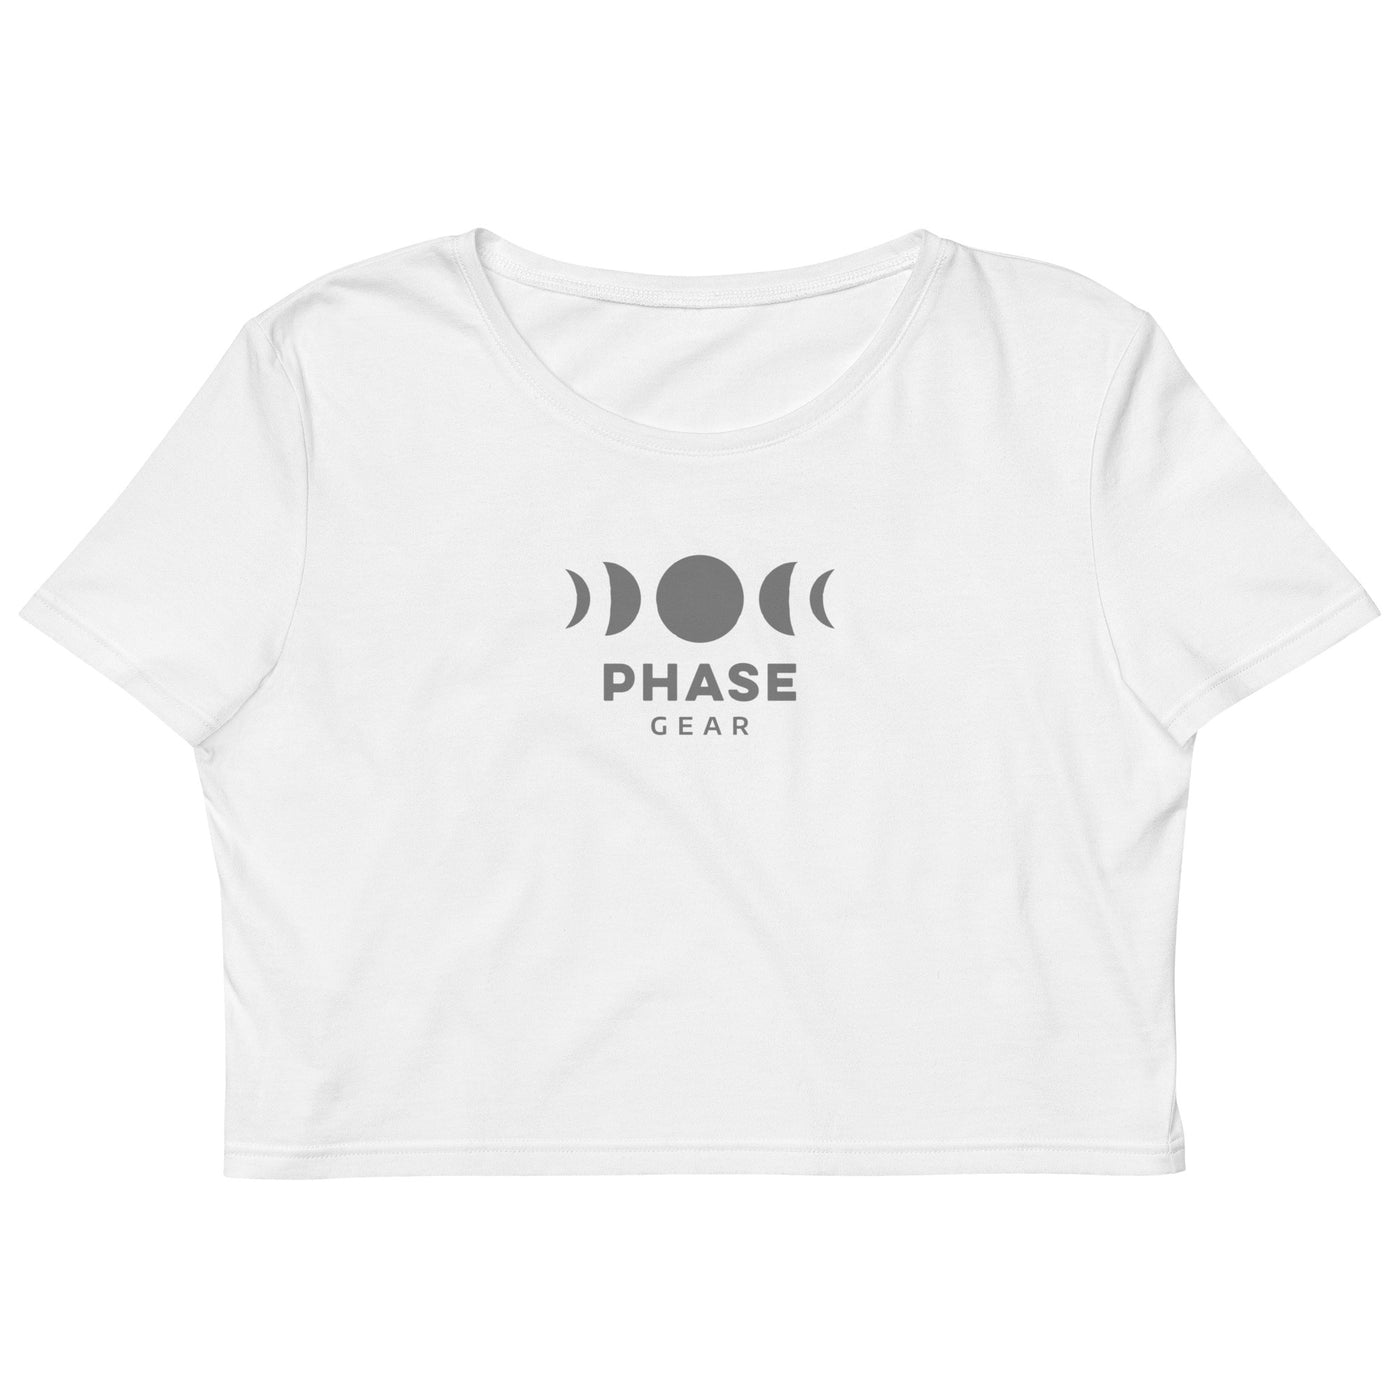 Women's Phase Gear Crop Top